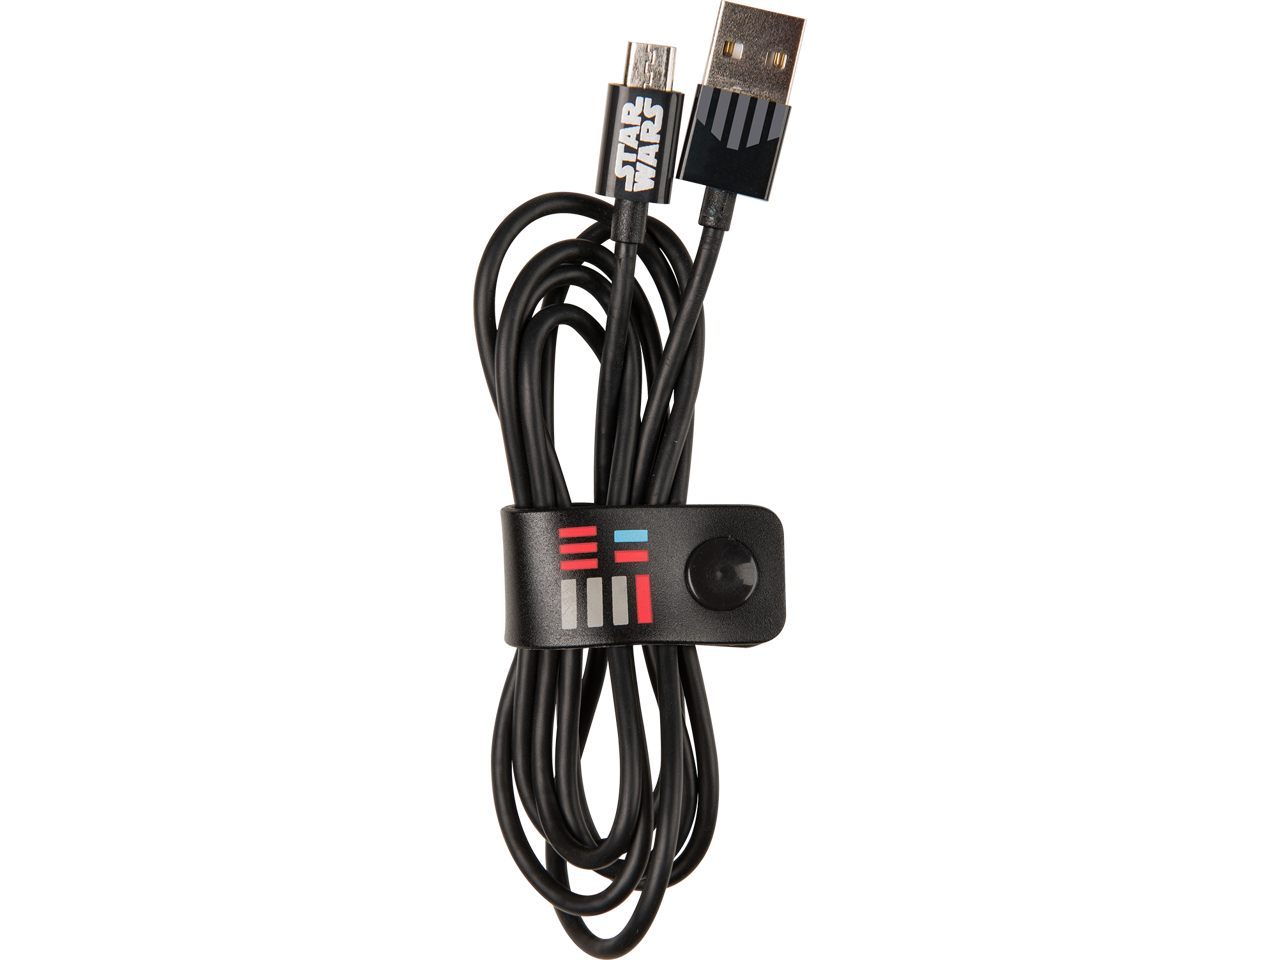 Star Wars Darth Vader Micro USB Cable 120cm